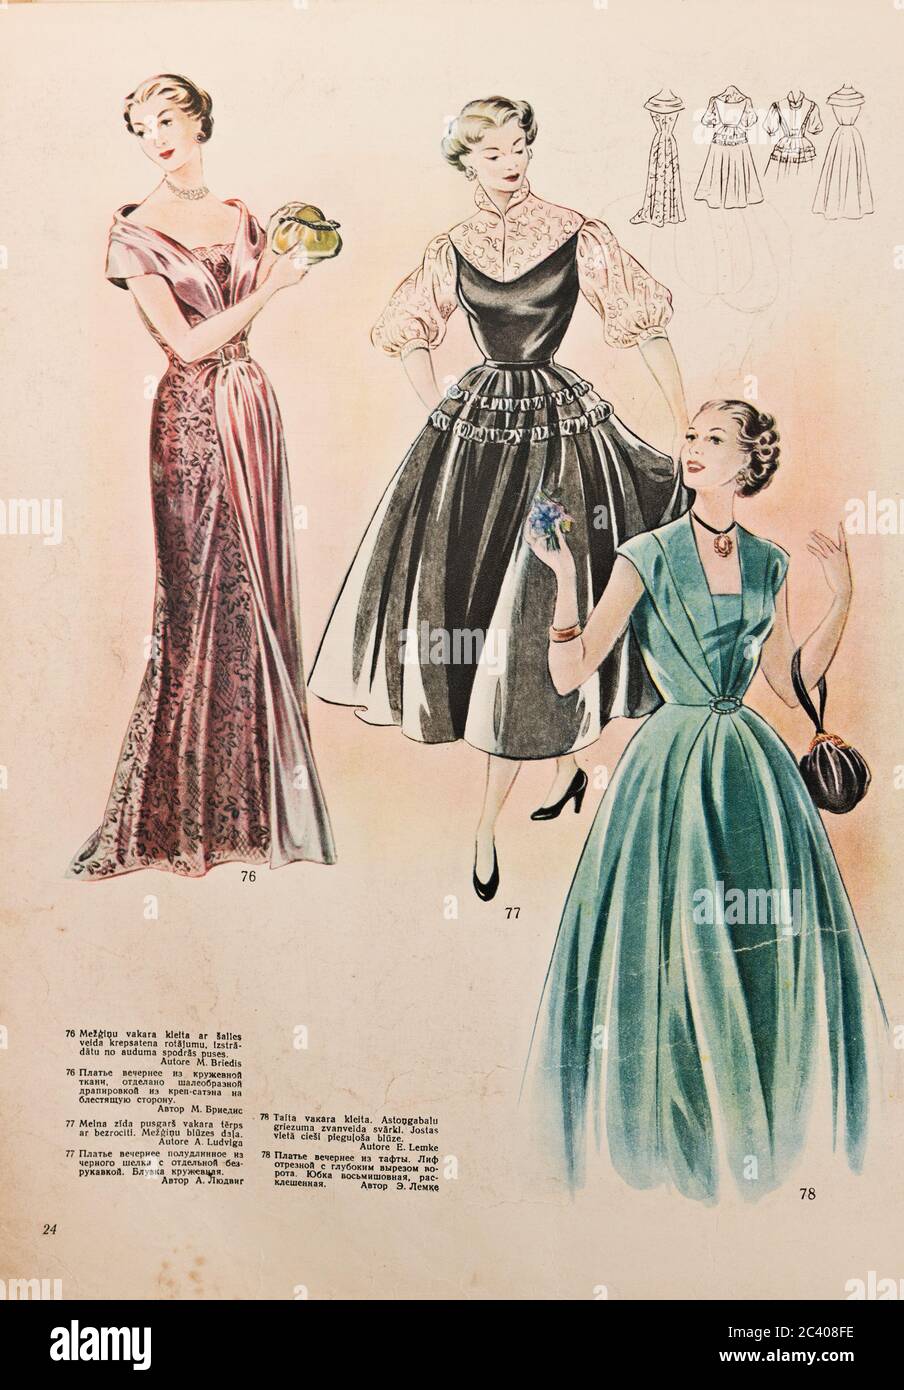 1950s Fashion - The Fashion eZine